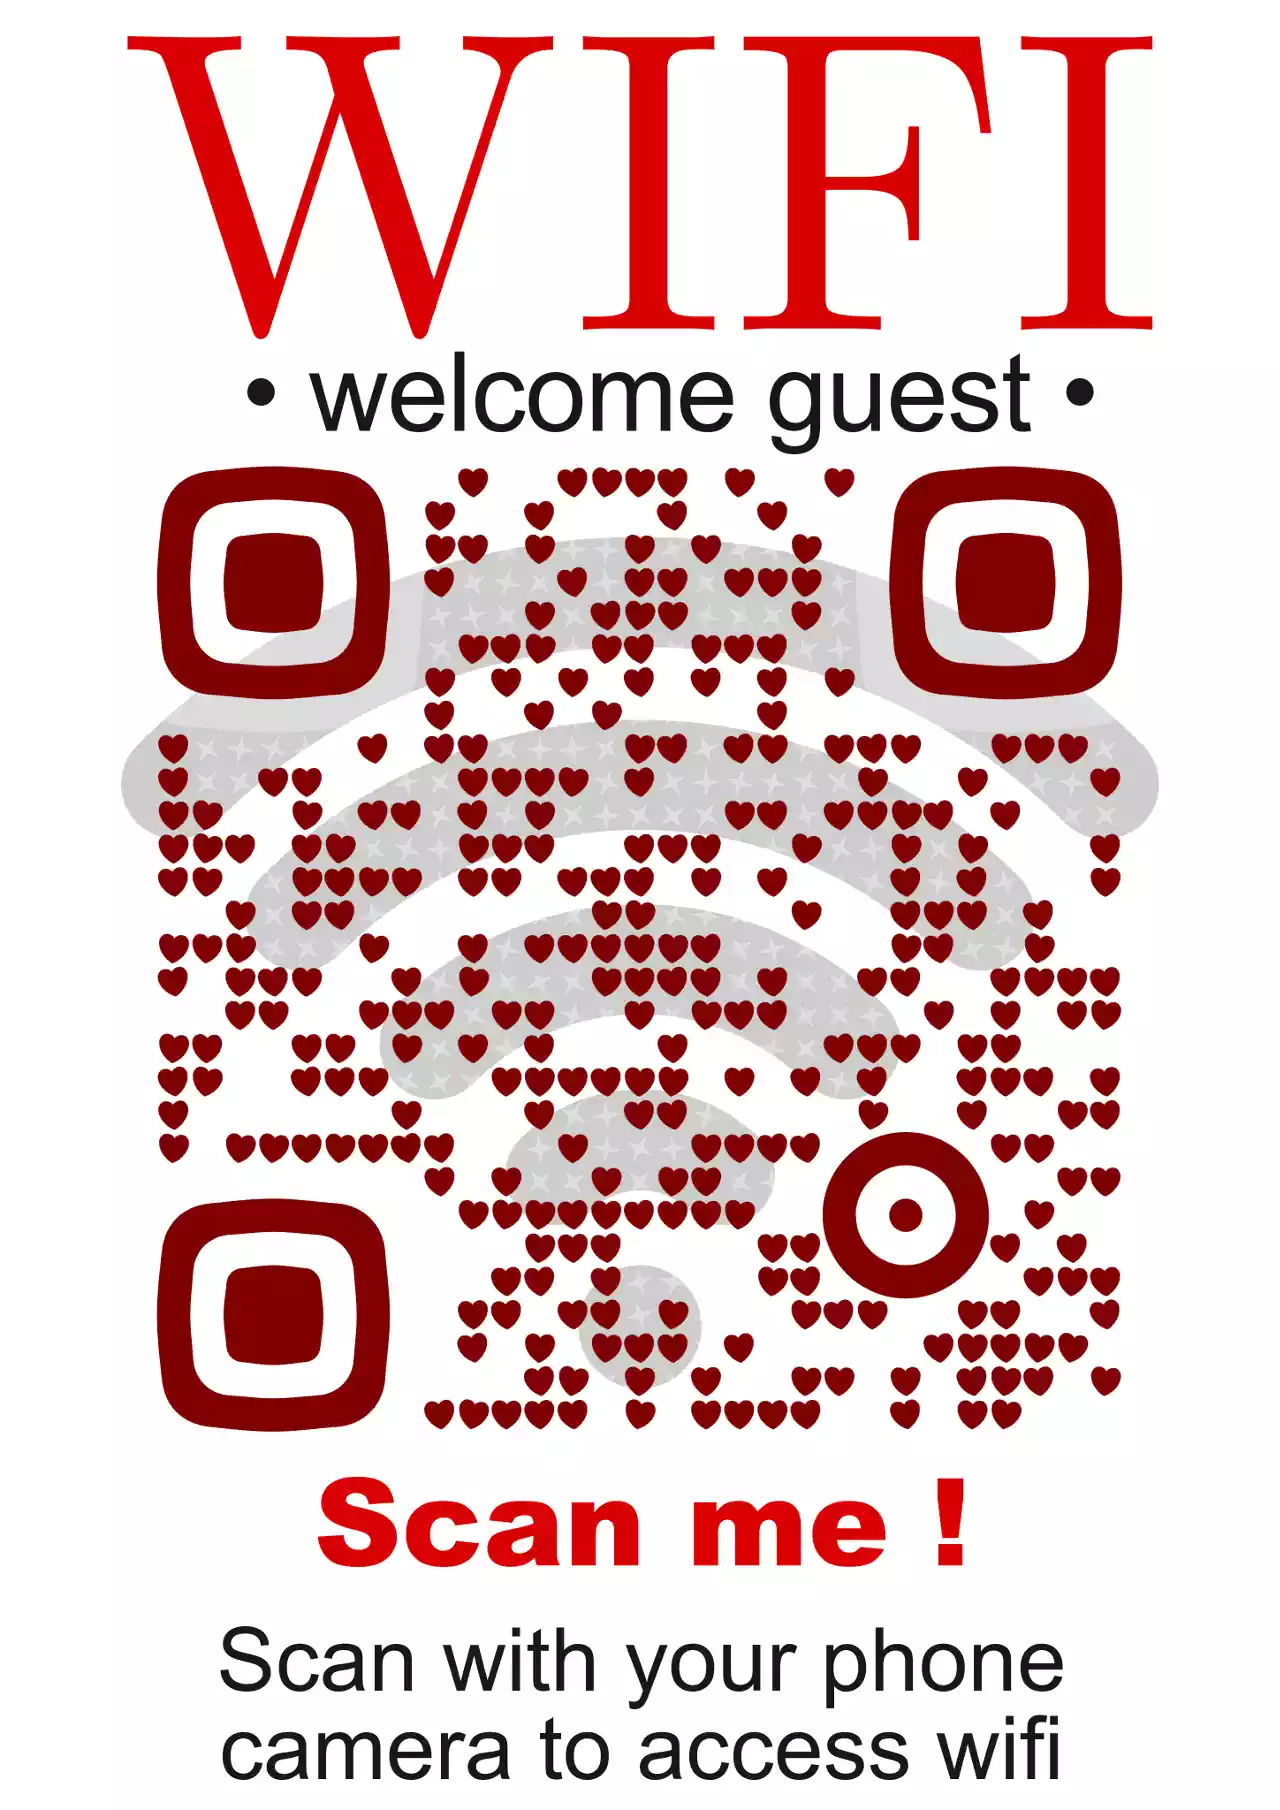 QRcodeLab qr generator - touch free wi-fi access QR image